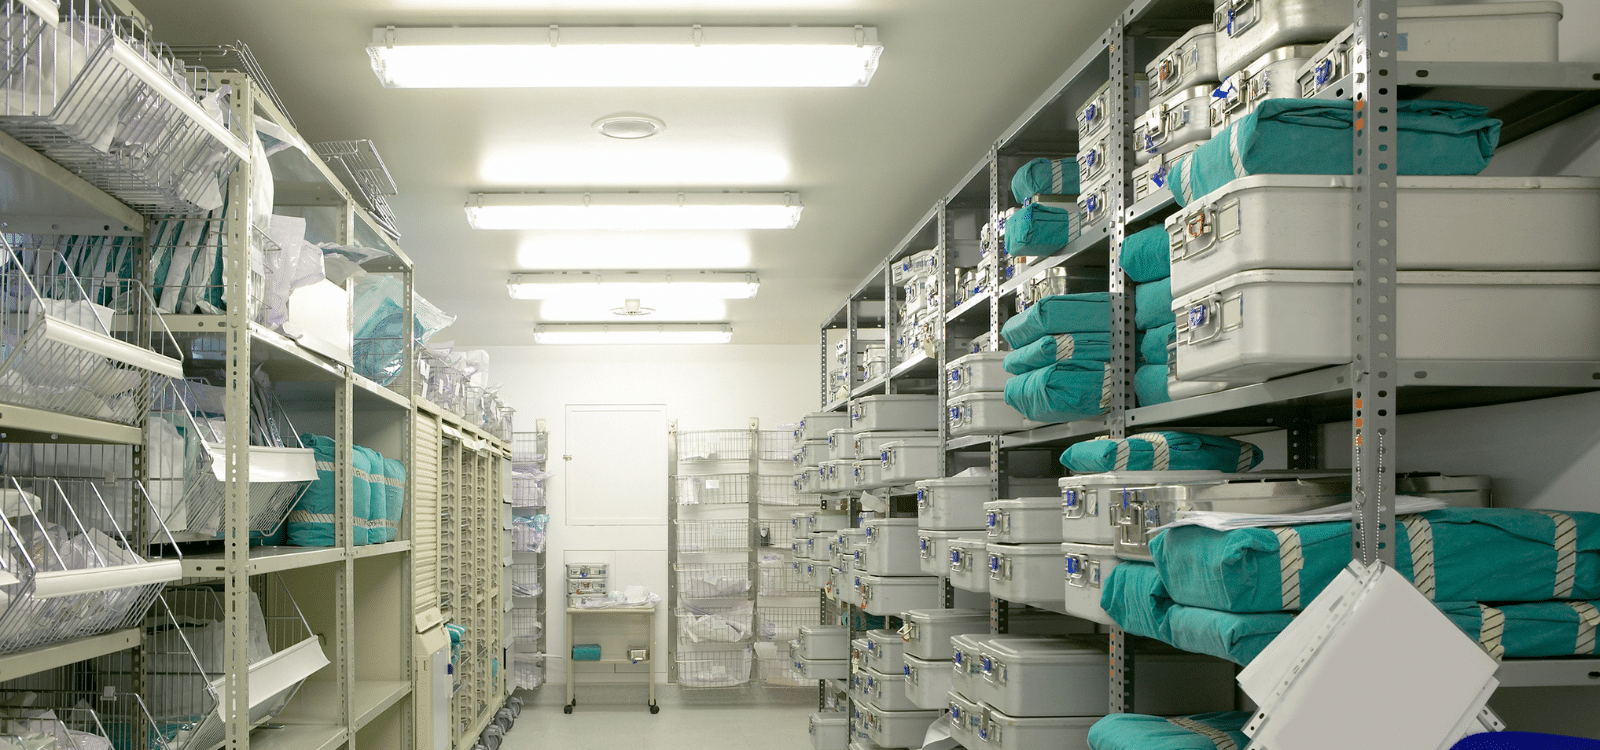 Indoor hospital storage room